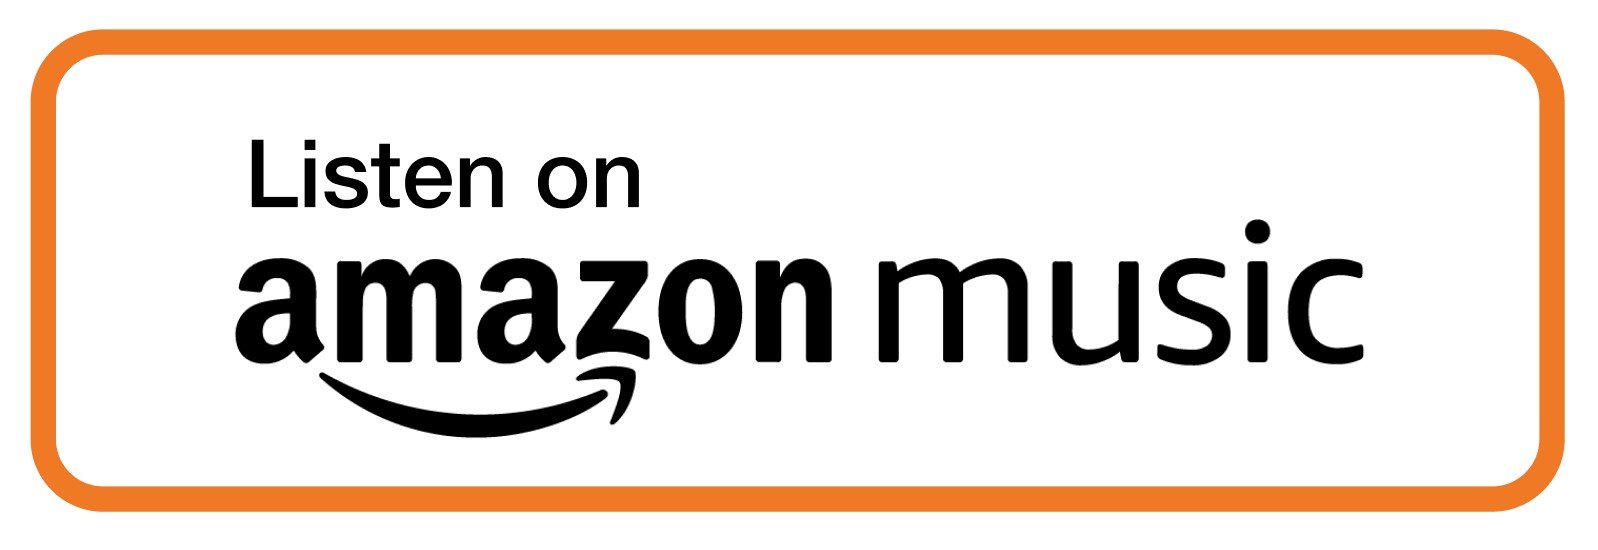 Karianne Michelle on Amazon Music